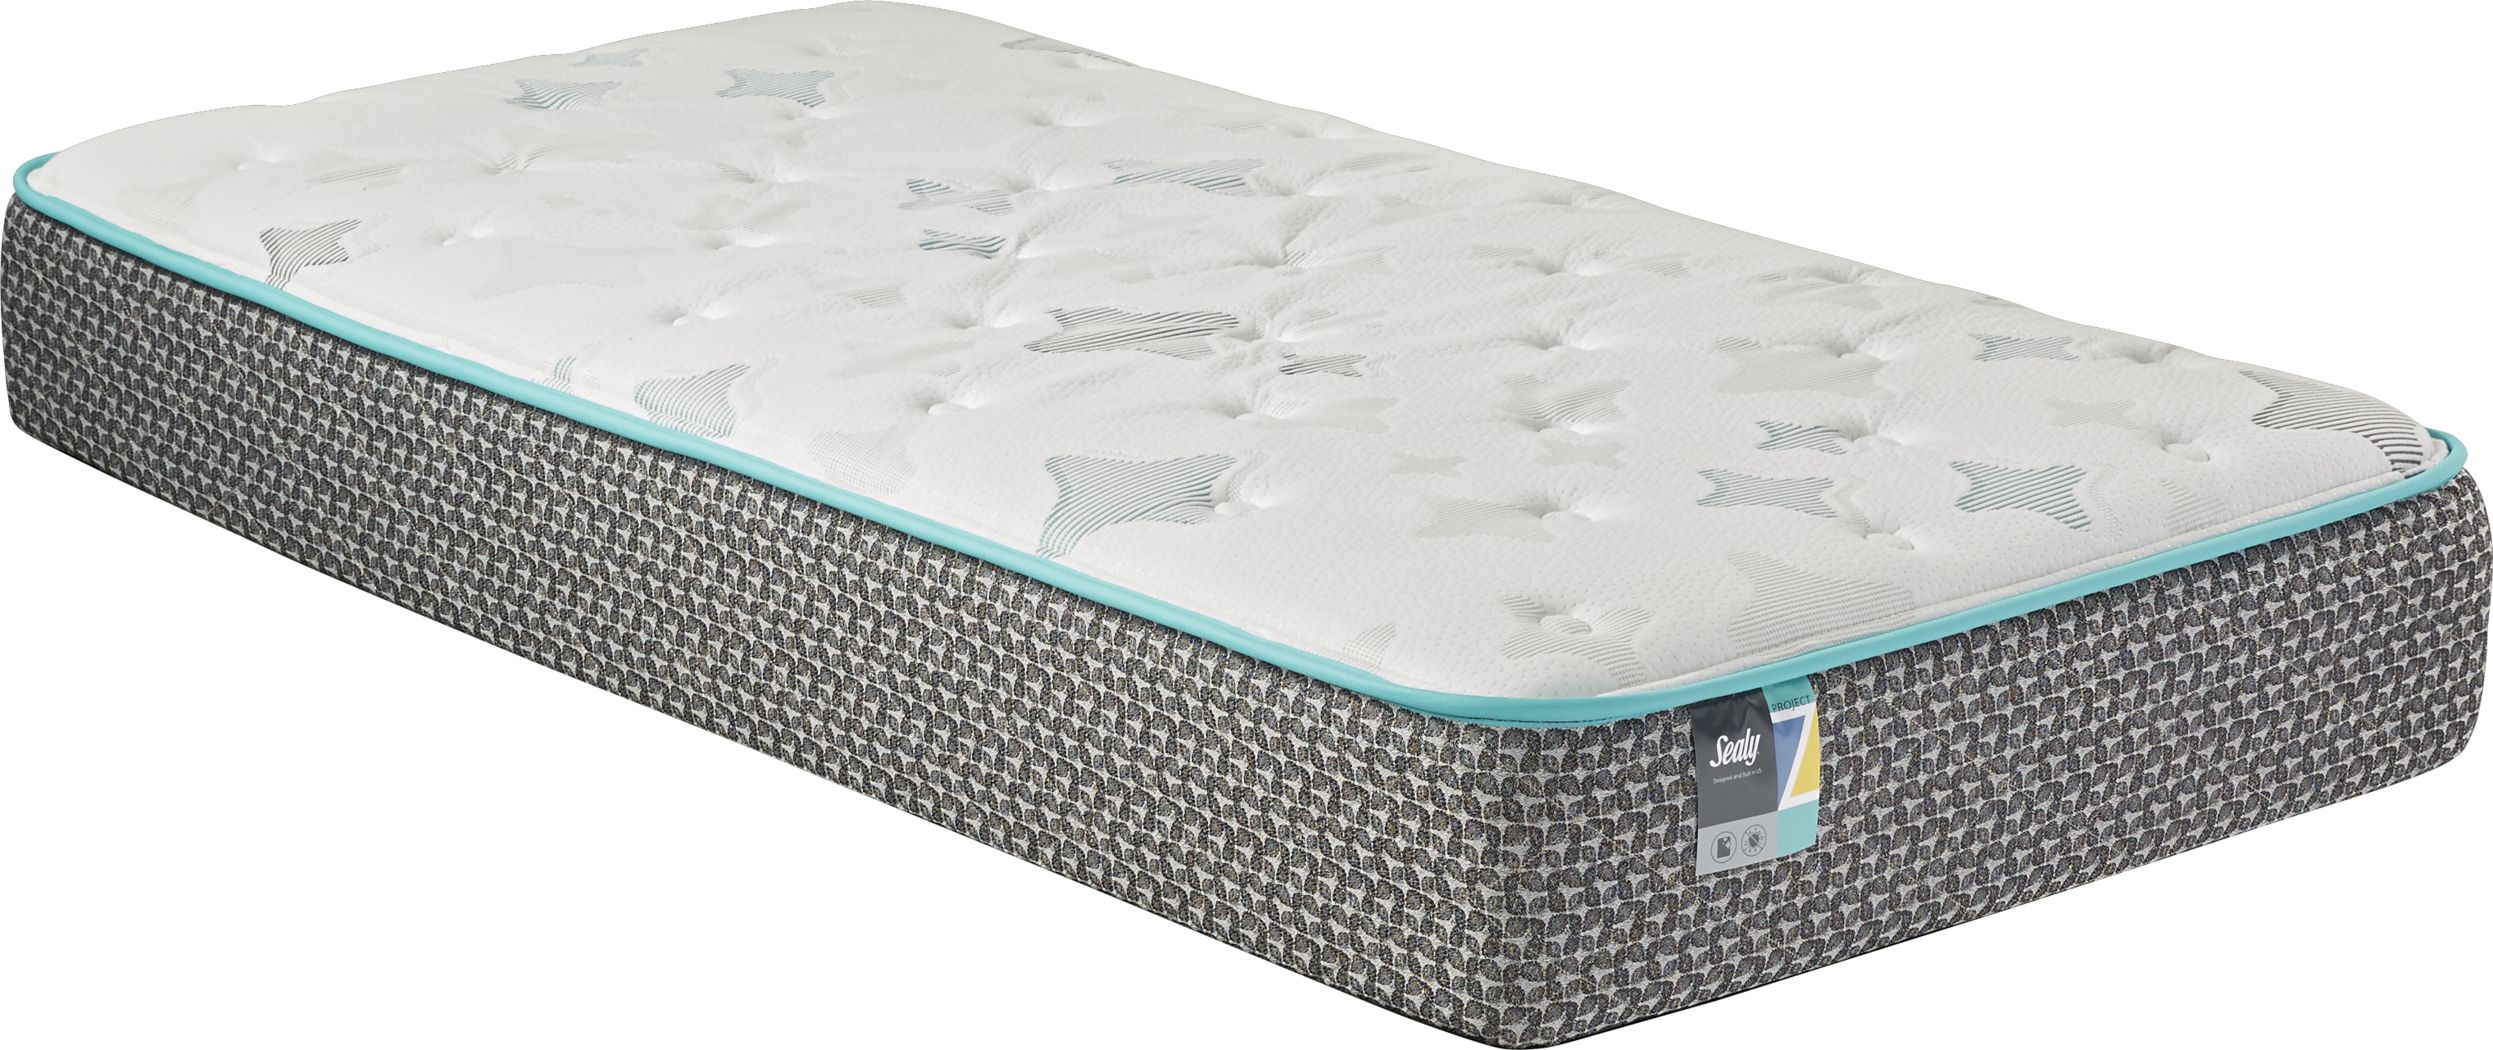 sealy nevada back saver twin mattress